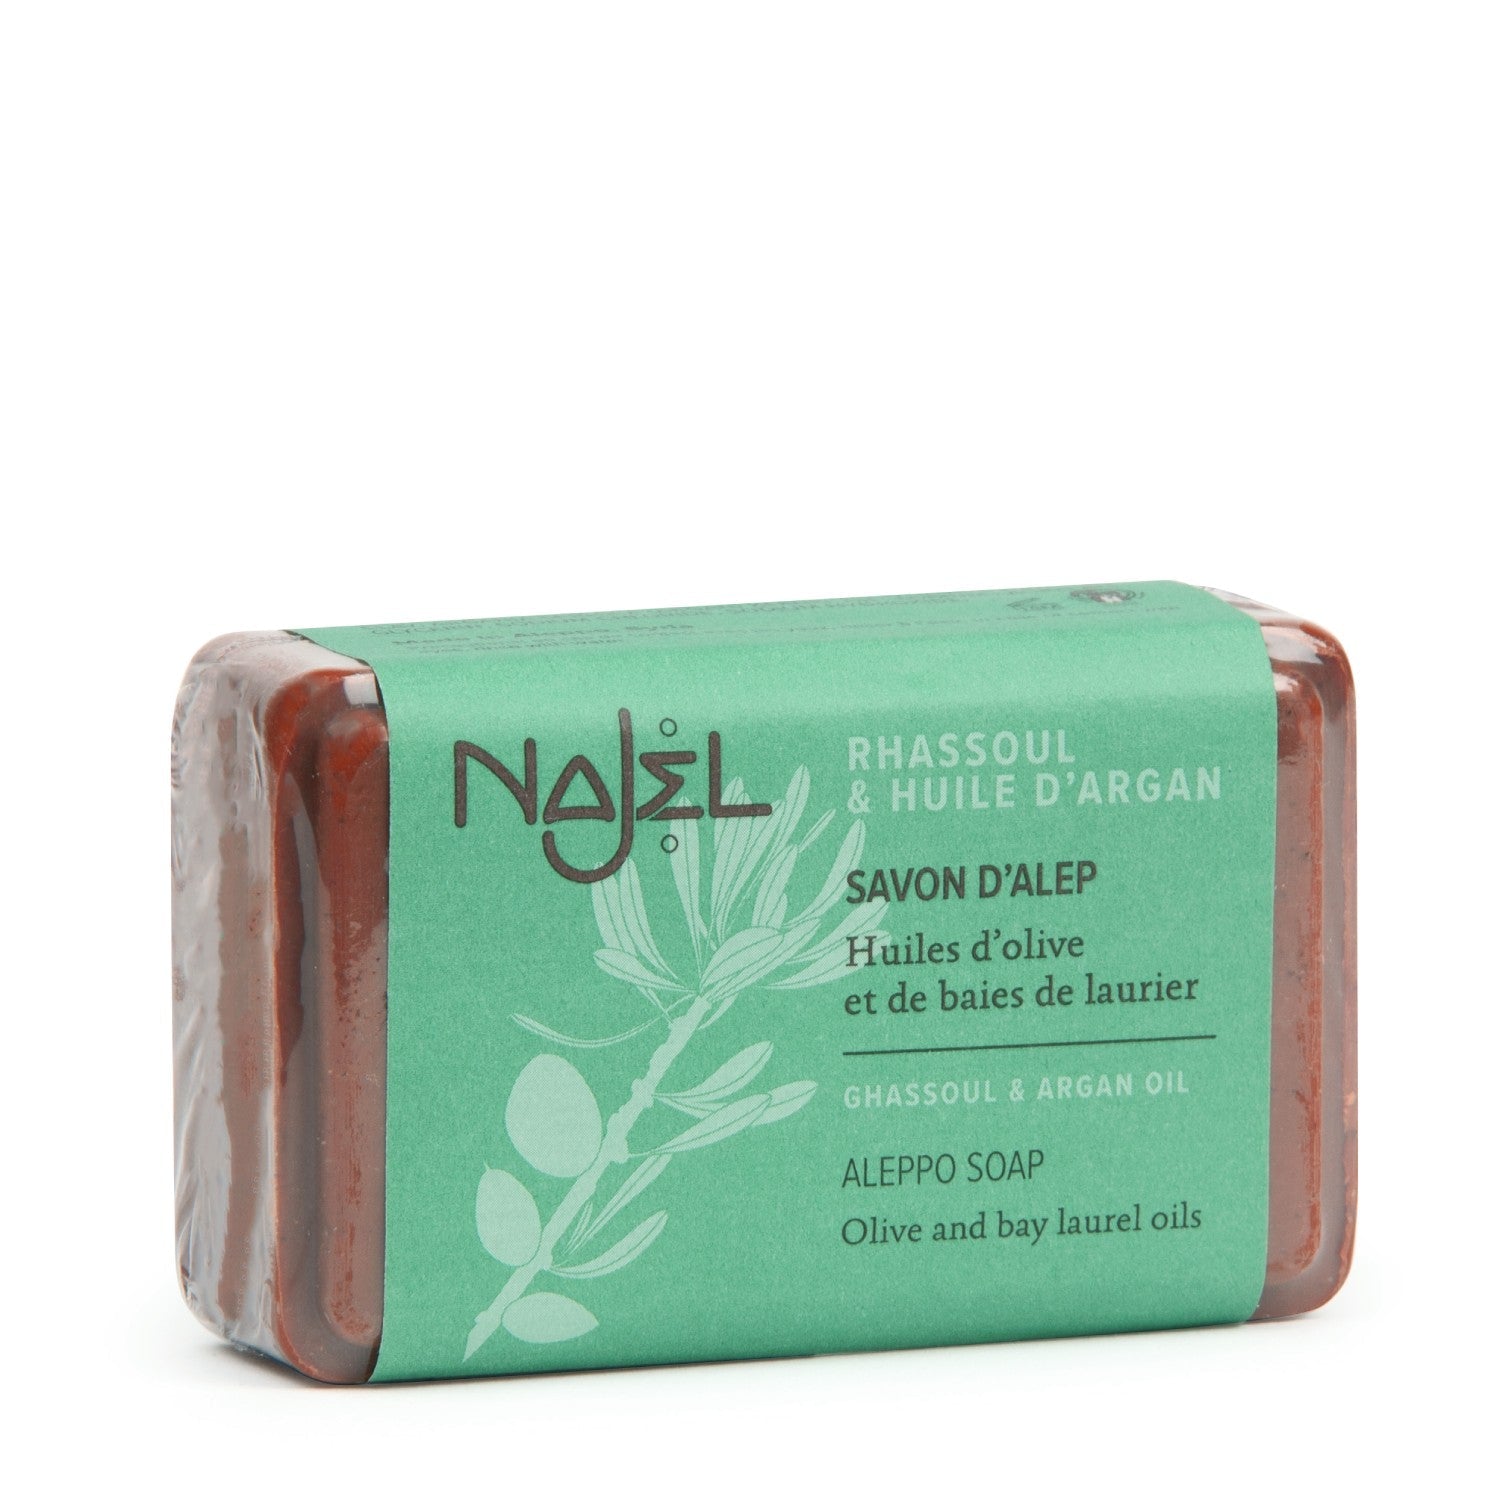 NAJEL Organic Skincare - Aleppo Soap Ghassoul &amp; Argan Oil, 100g